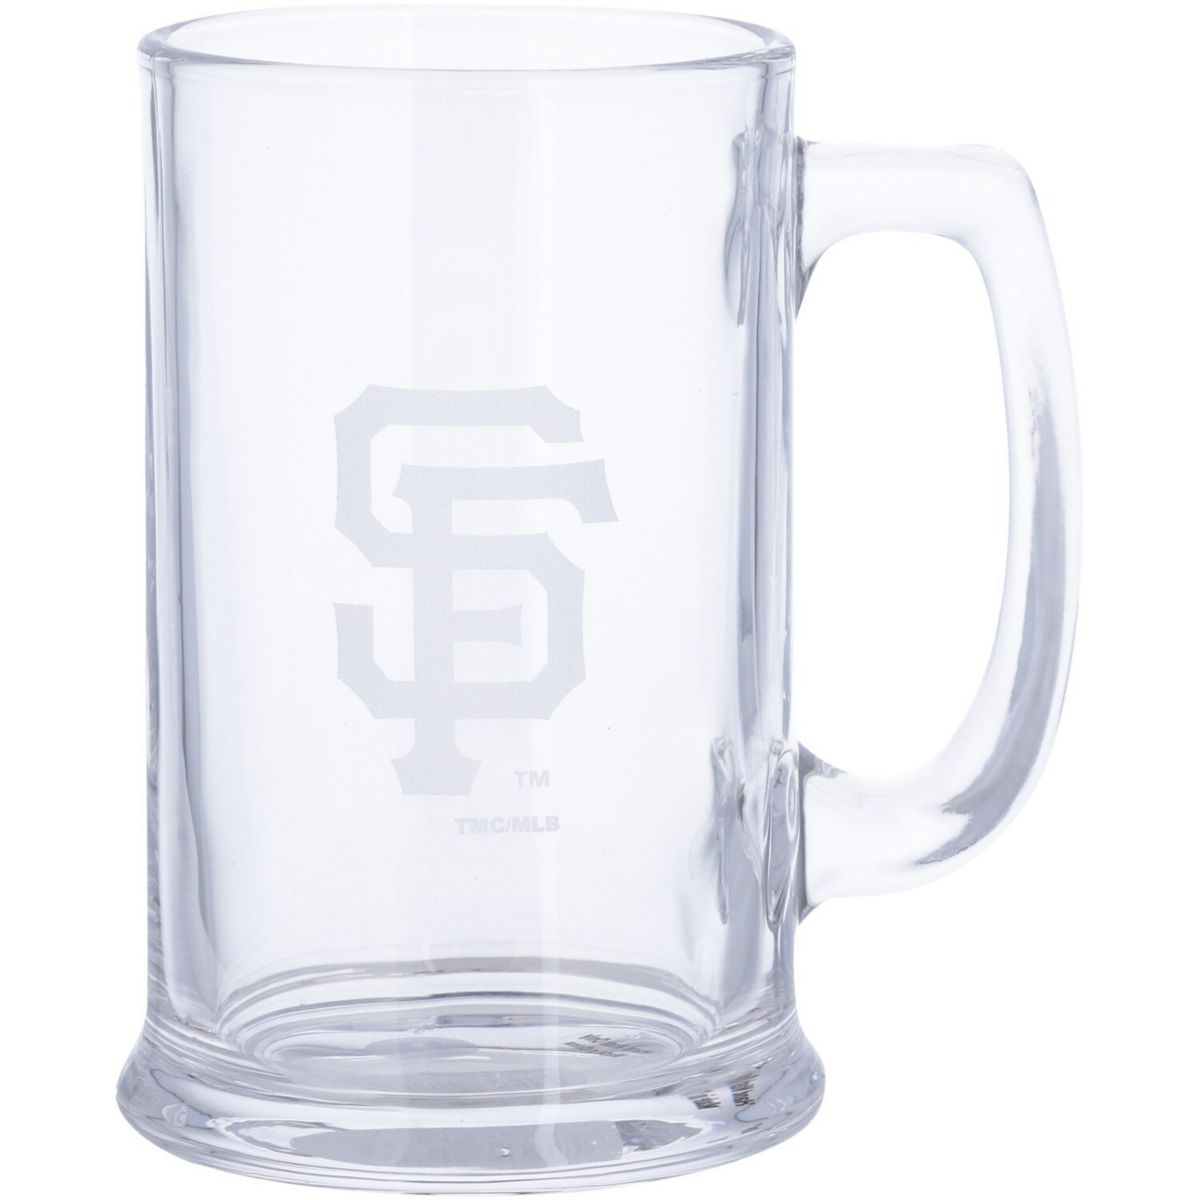 San Francisco Giants 15oz. Stein Glass Unbranded